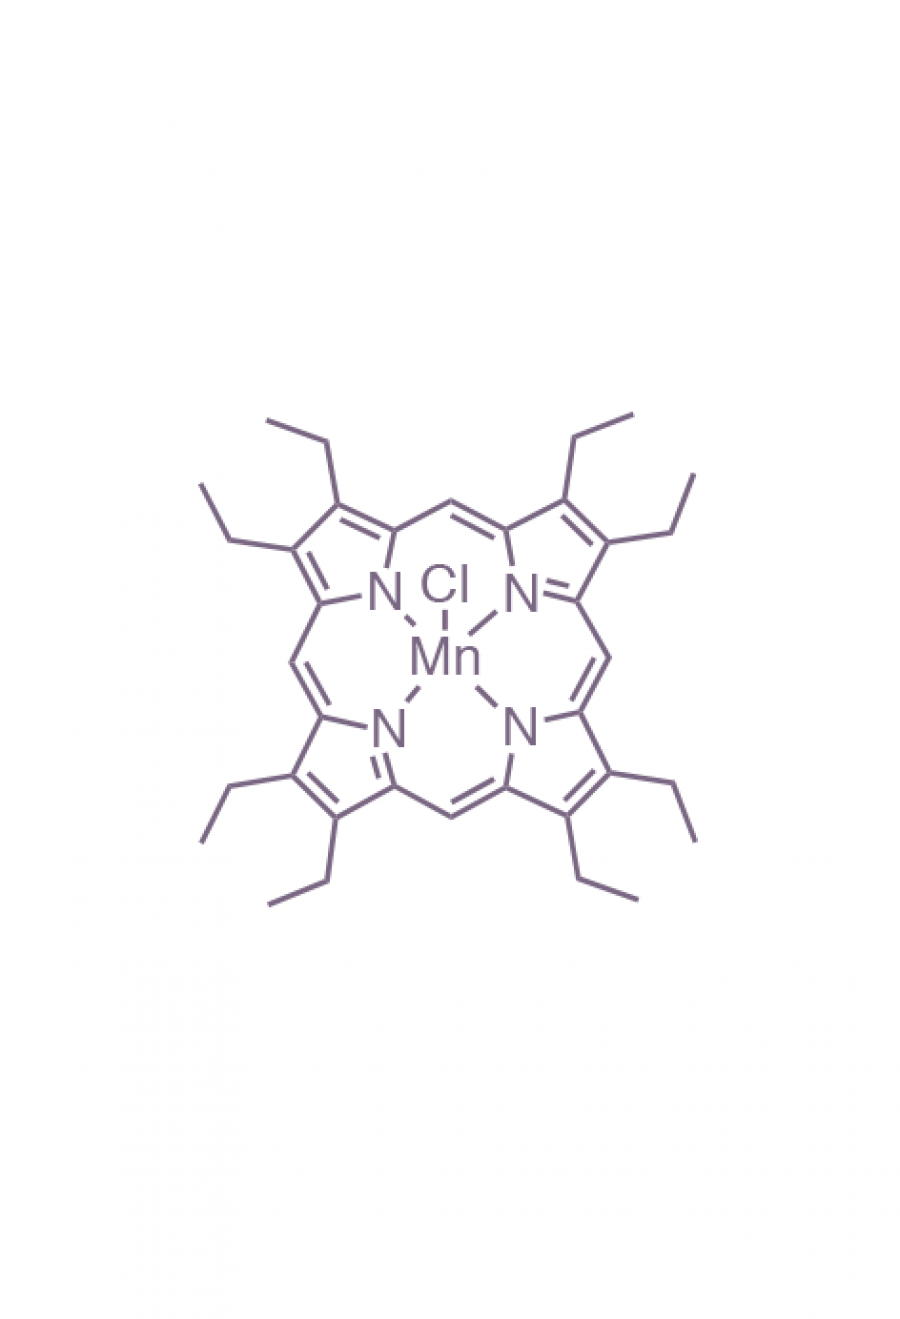 manganese(III) 2,3,7,8,12,13,17,18-(octaethyl)porphyrin chloride